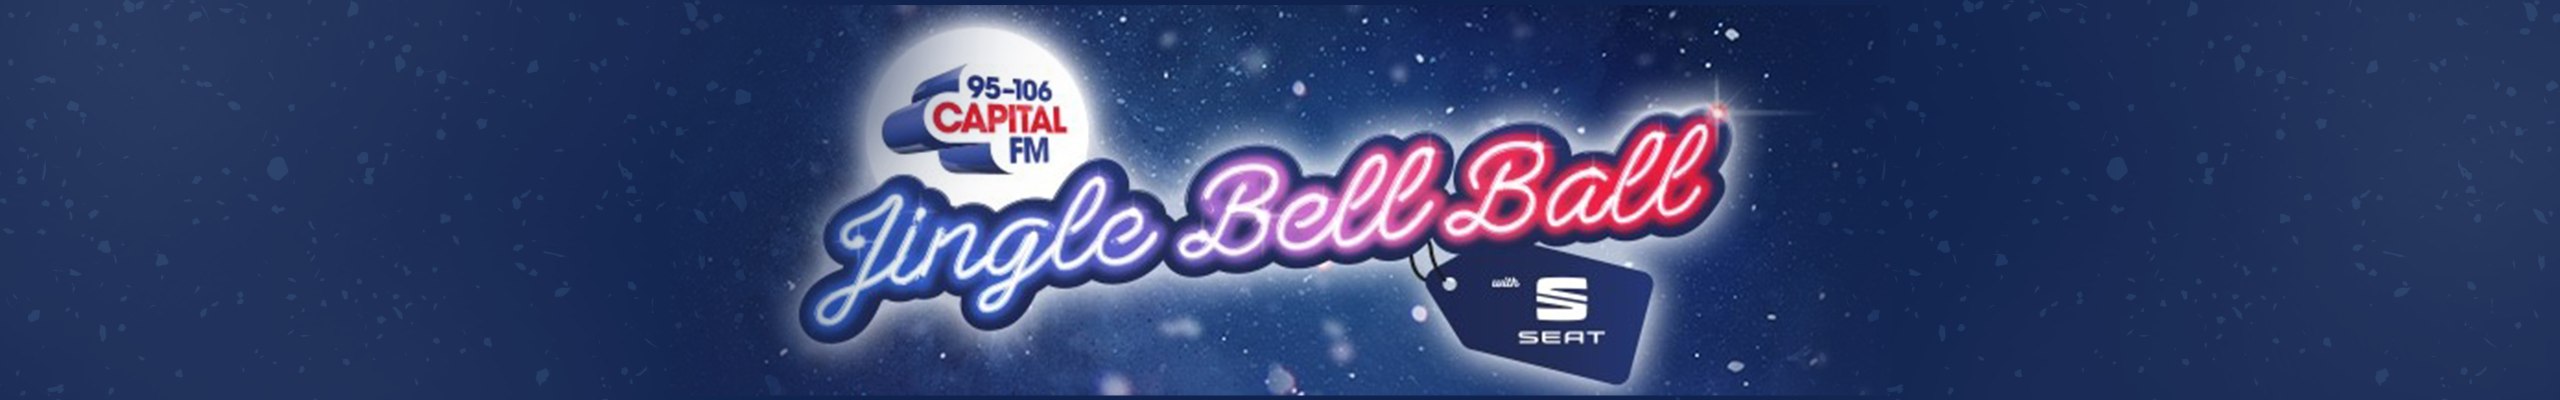 SEAT logo and jingle bell ball logo